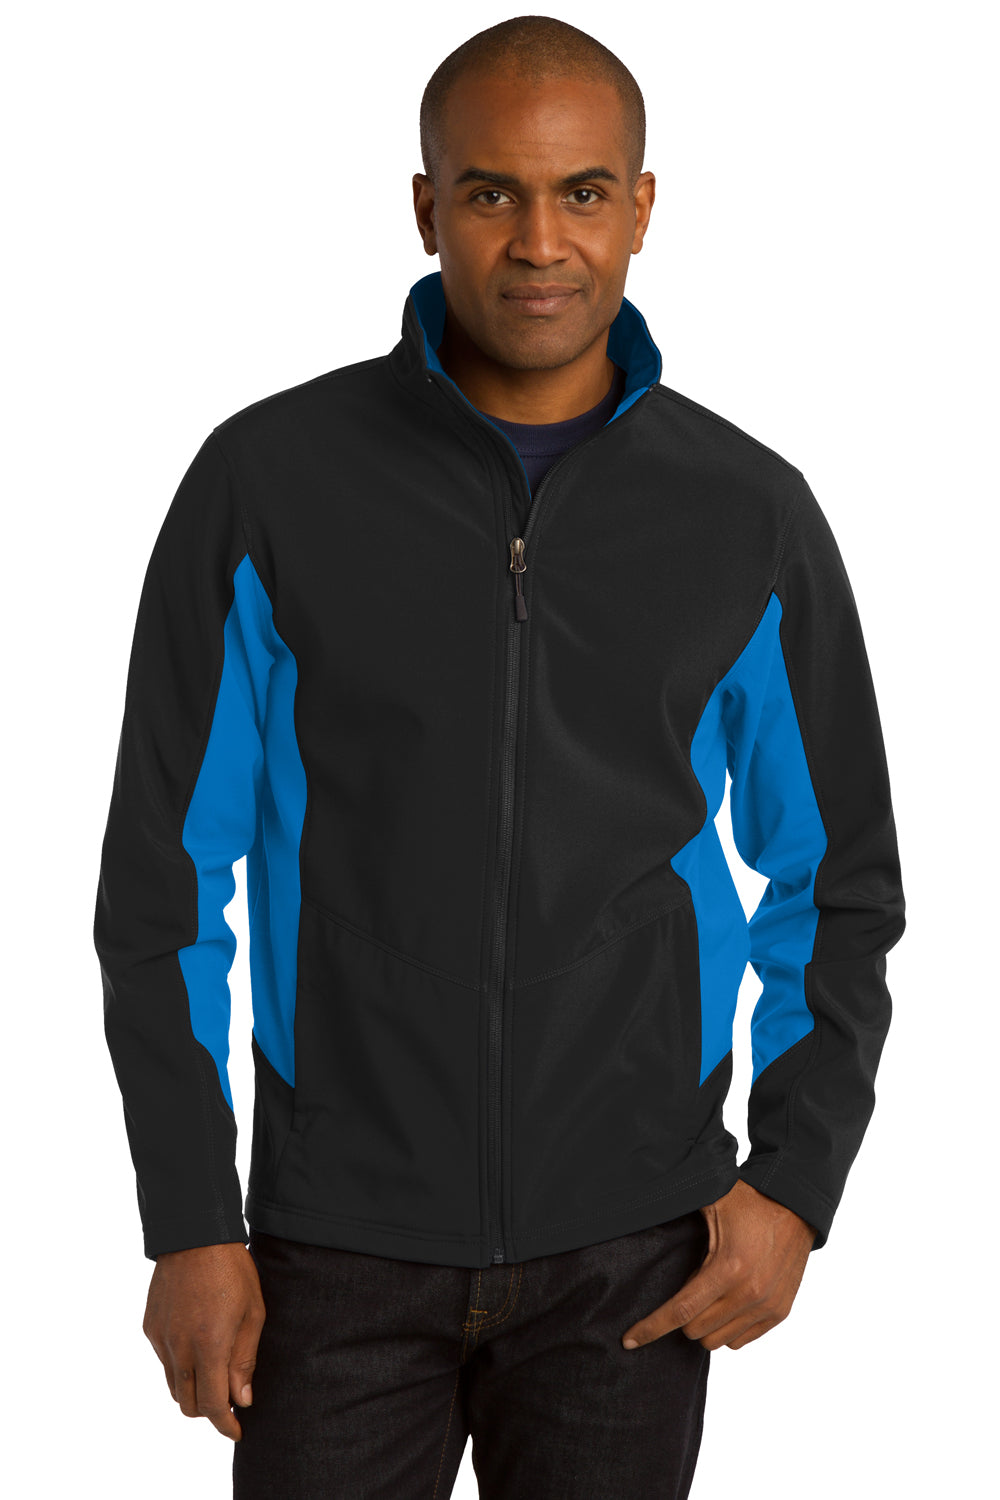 Port Authority J318 Mens Core Wind & Water Resistant Full Zip Jacket Black/Royal Blue Front